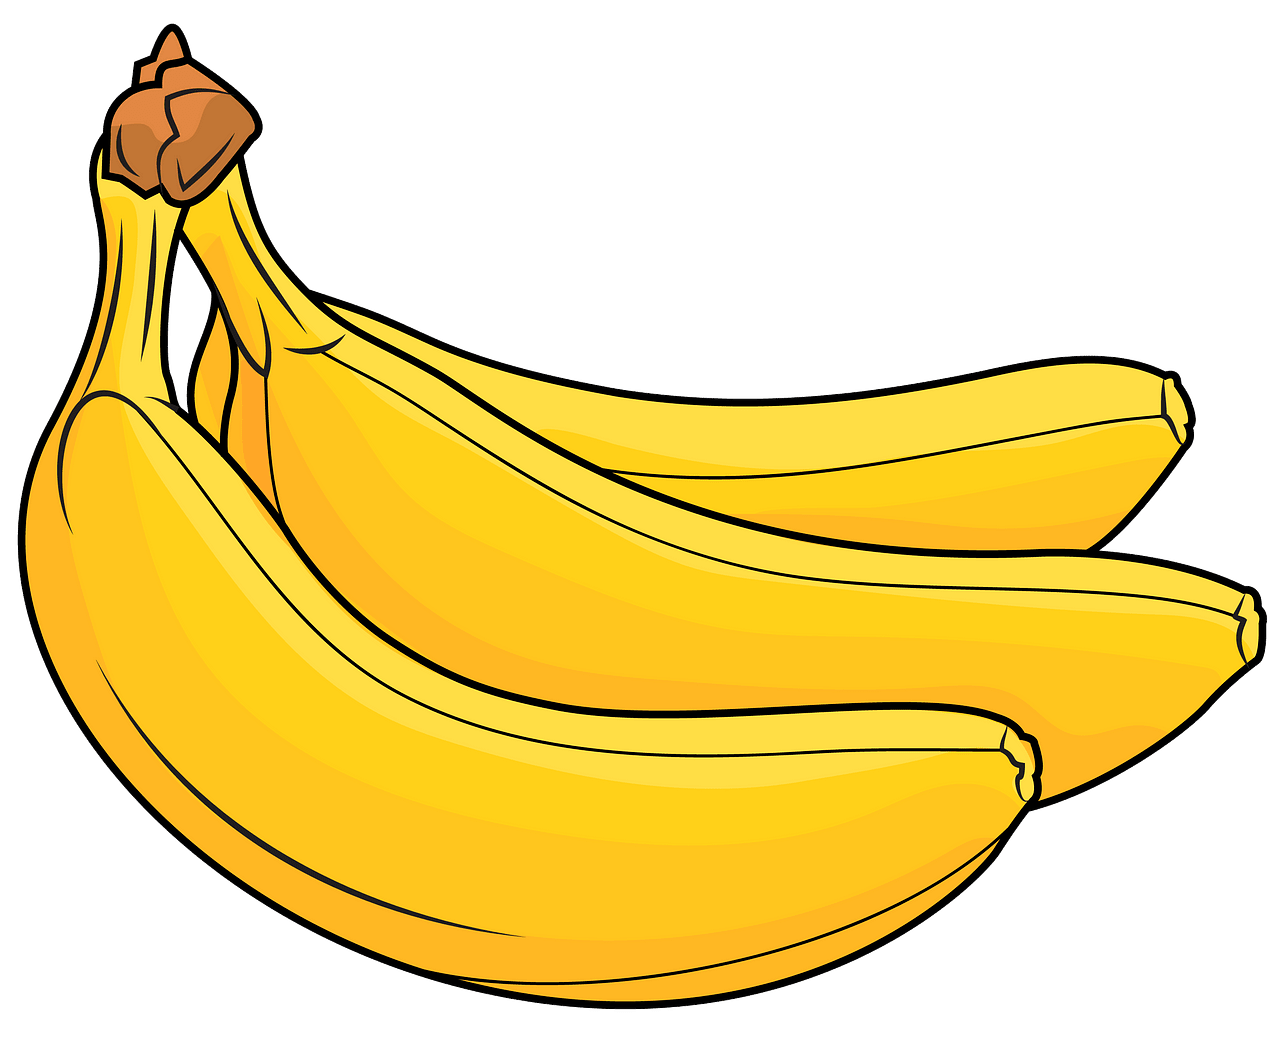 Bananas clipart. Free download creazilla 